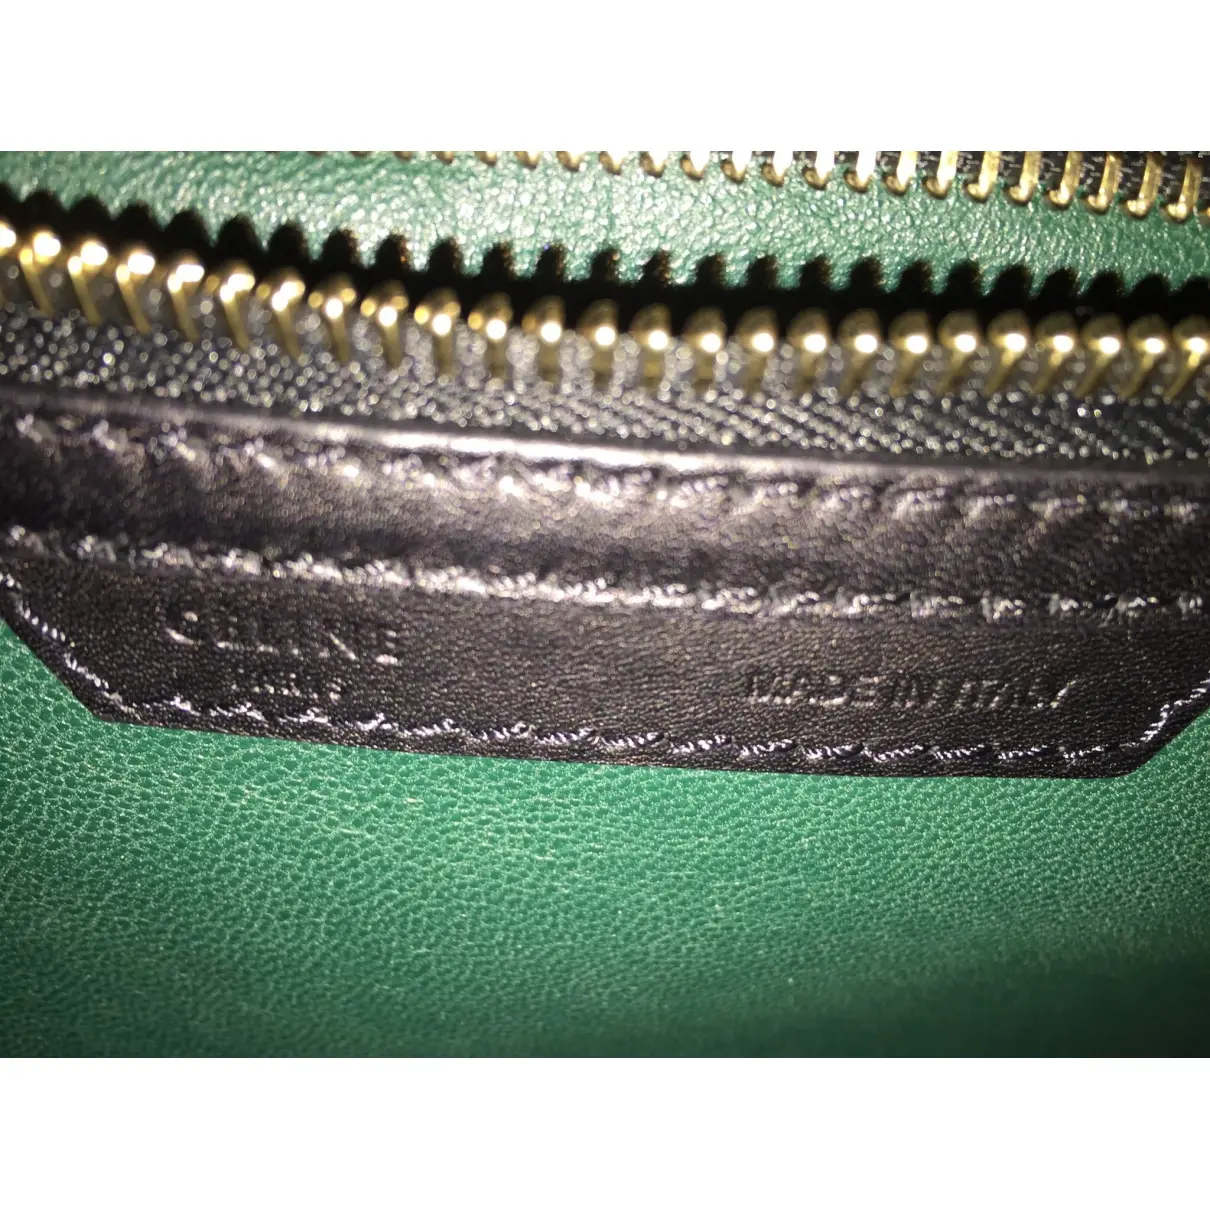 Buy Celine Luggage leather handbag online